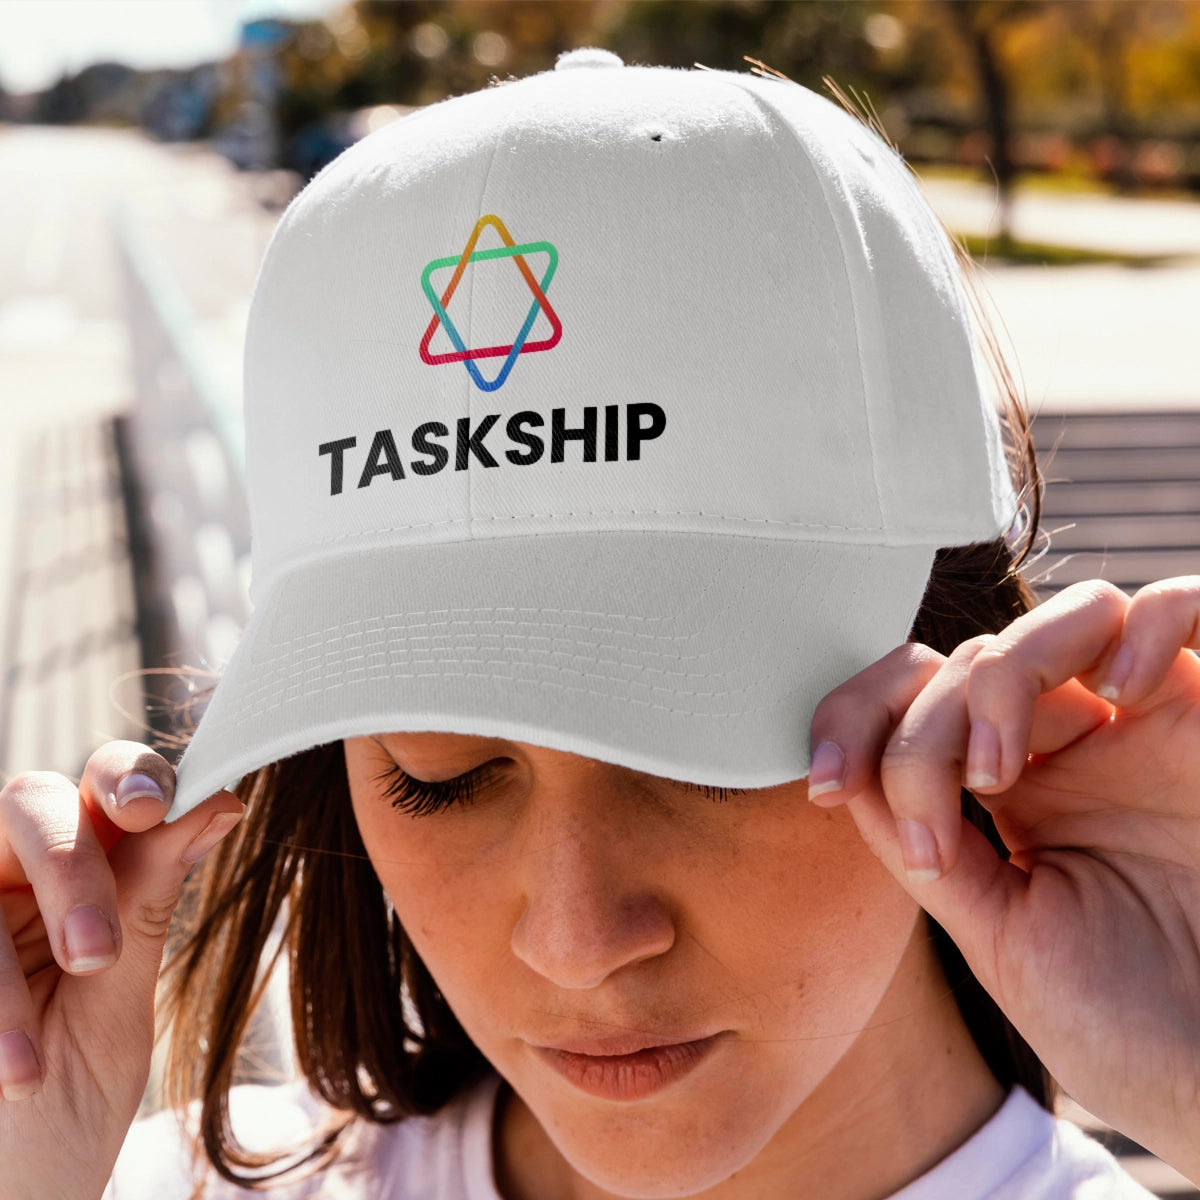 taskship.com